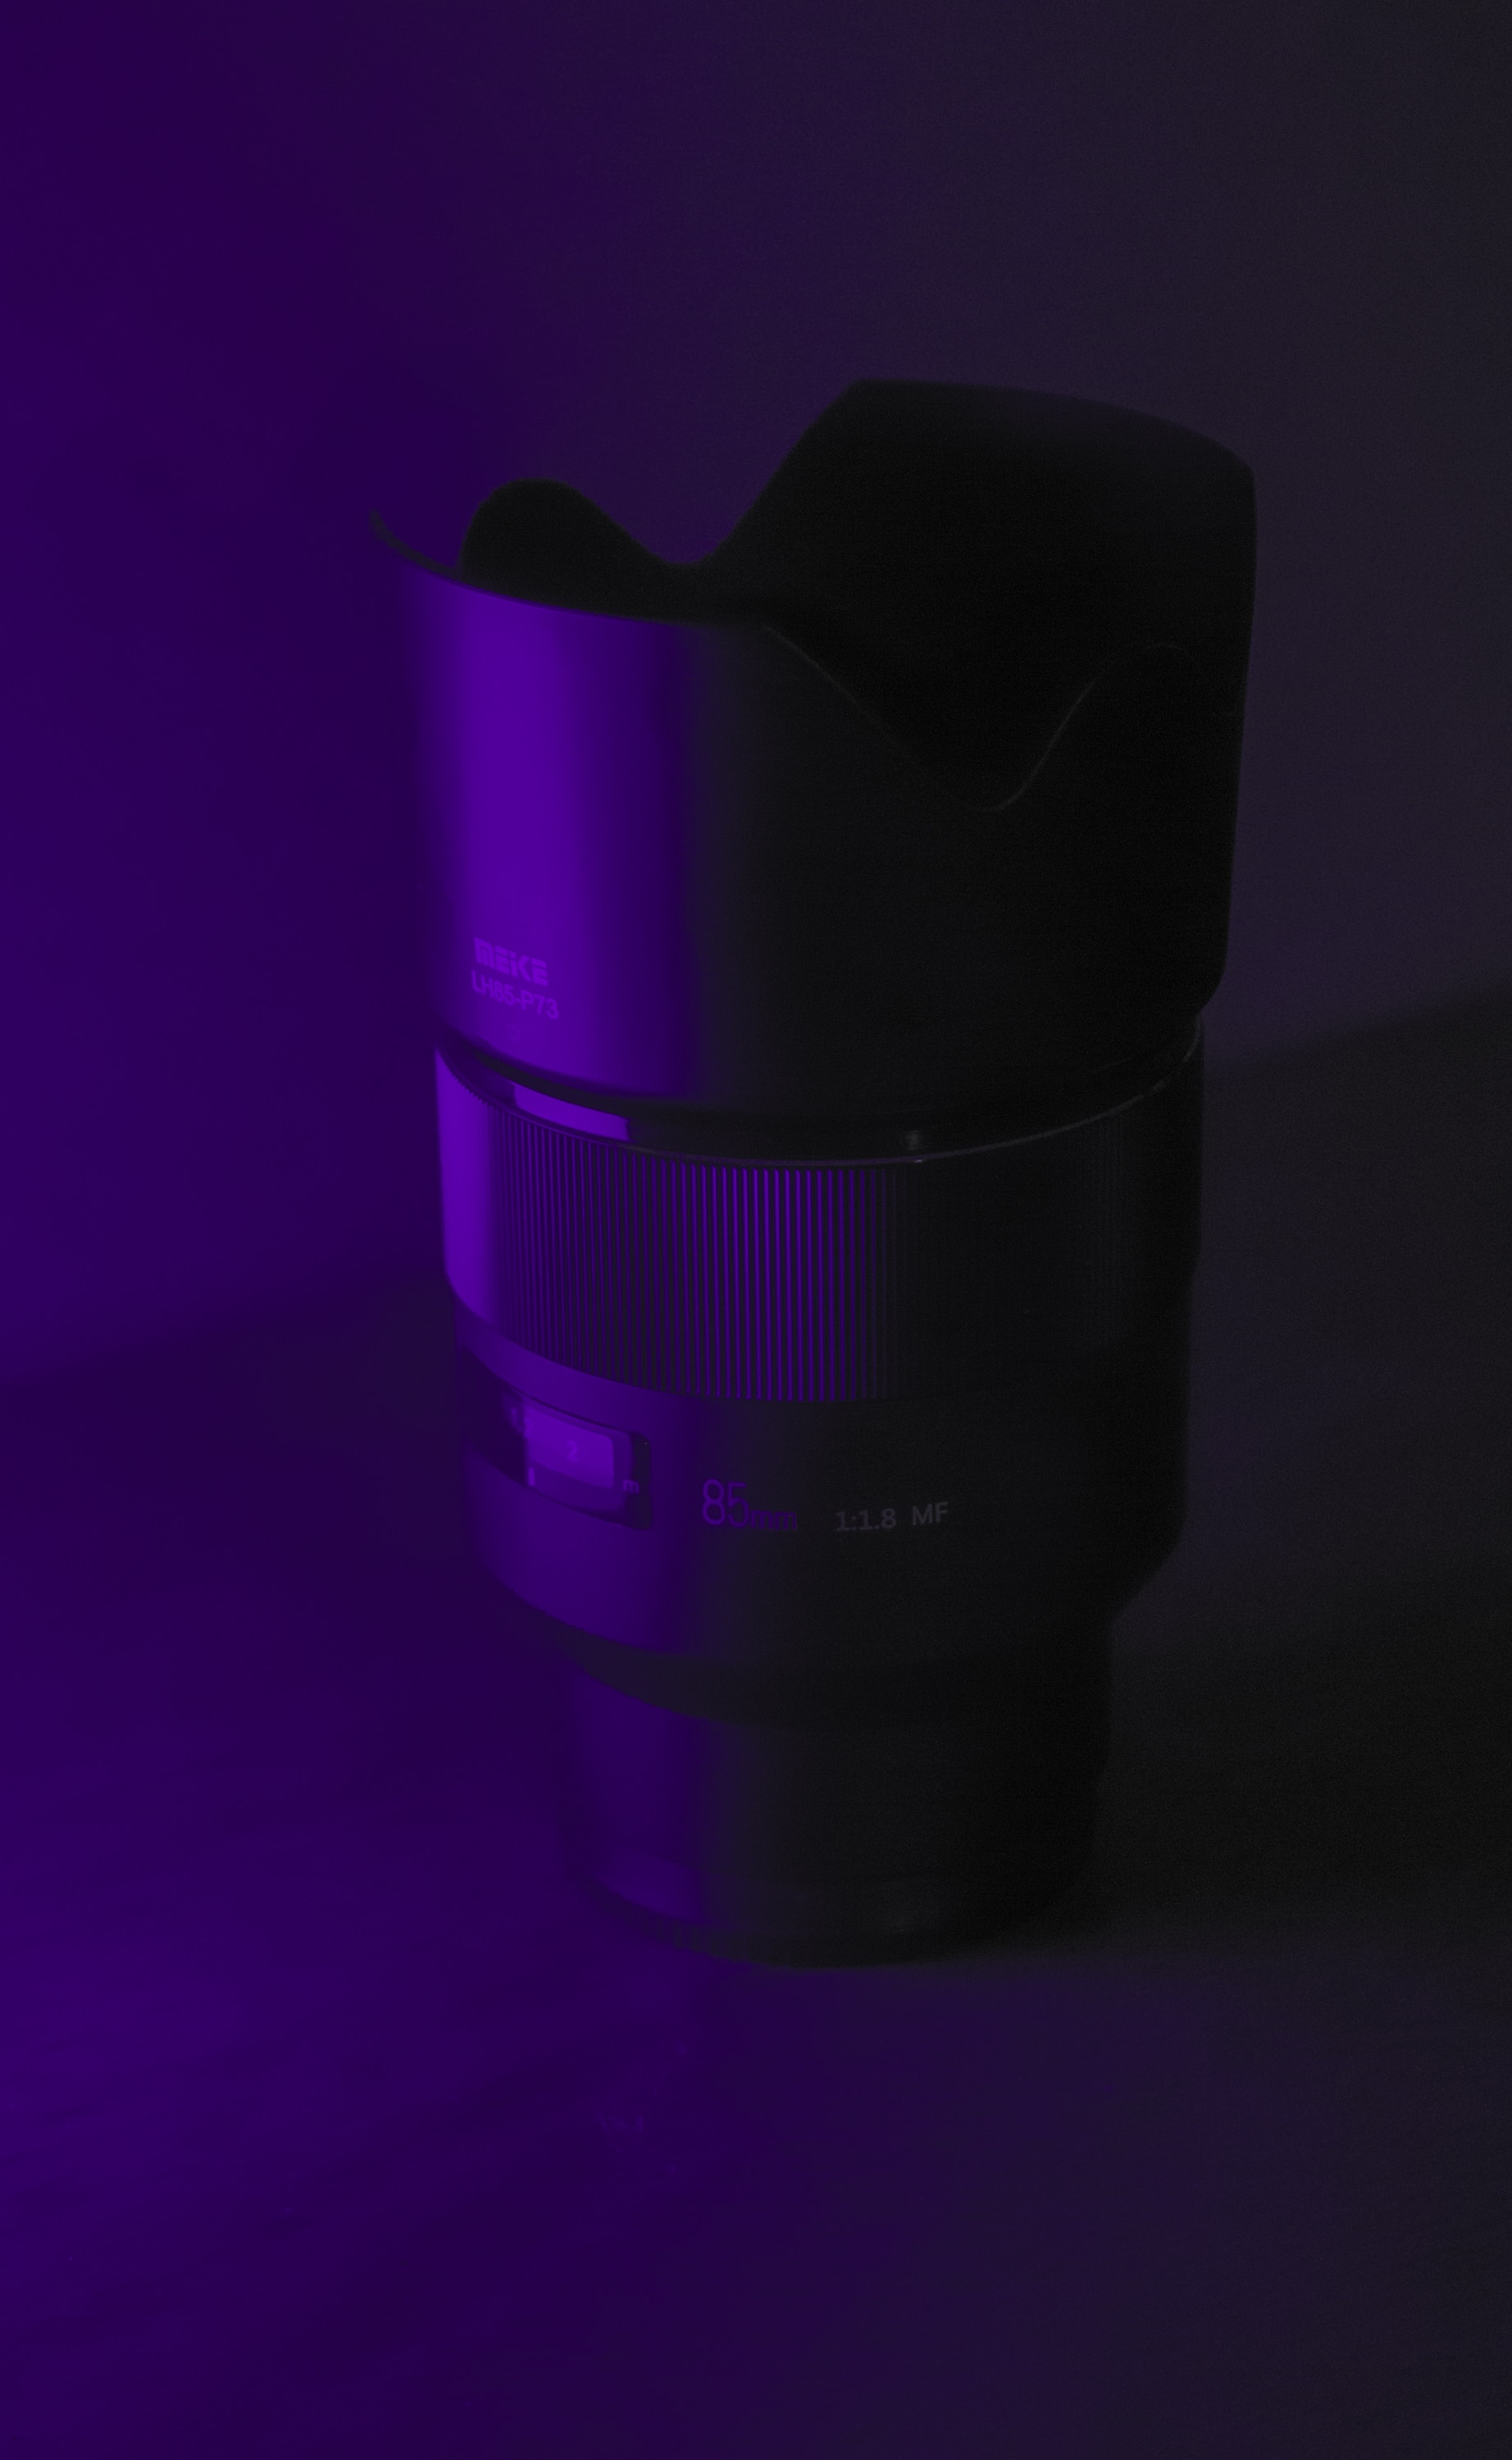 technology, violet, dark, purple, lens, technologies, camera